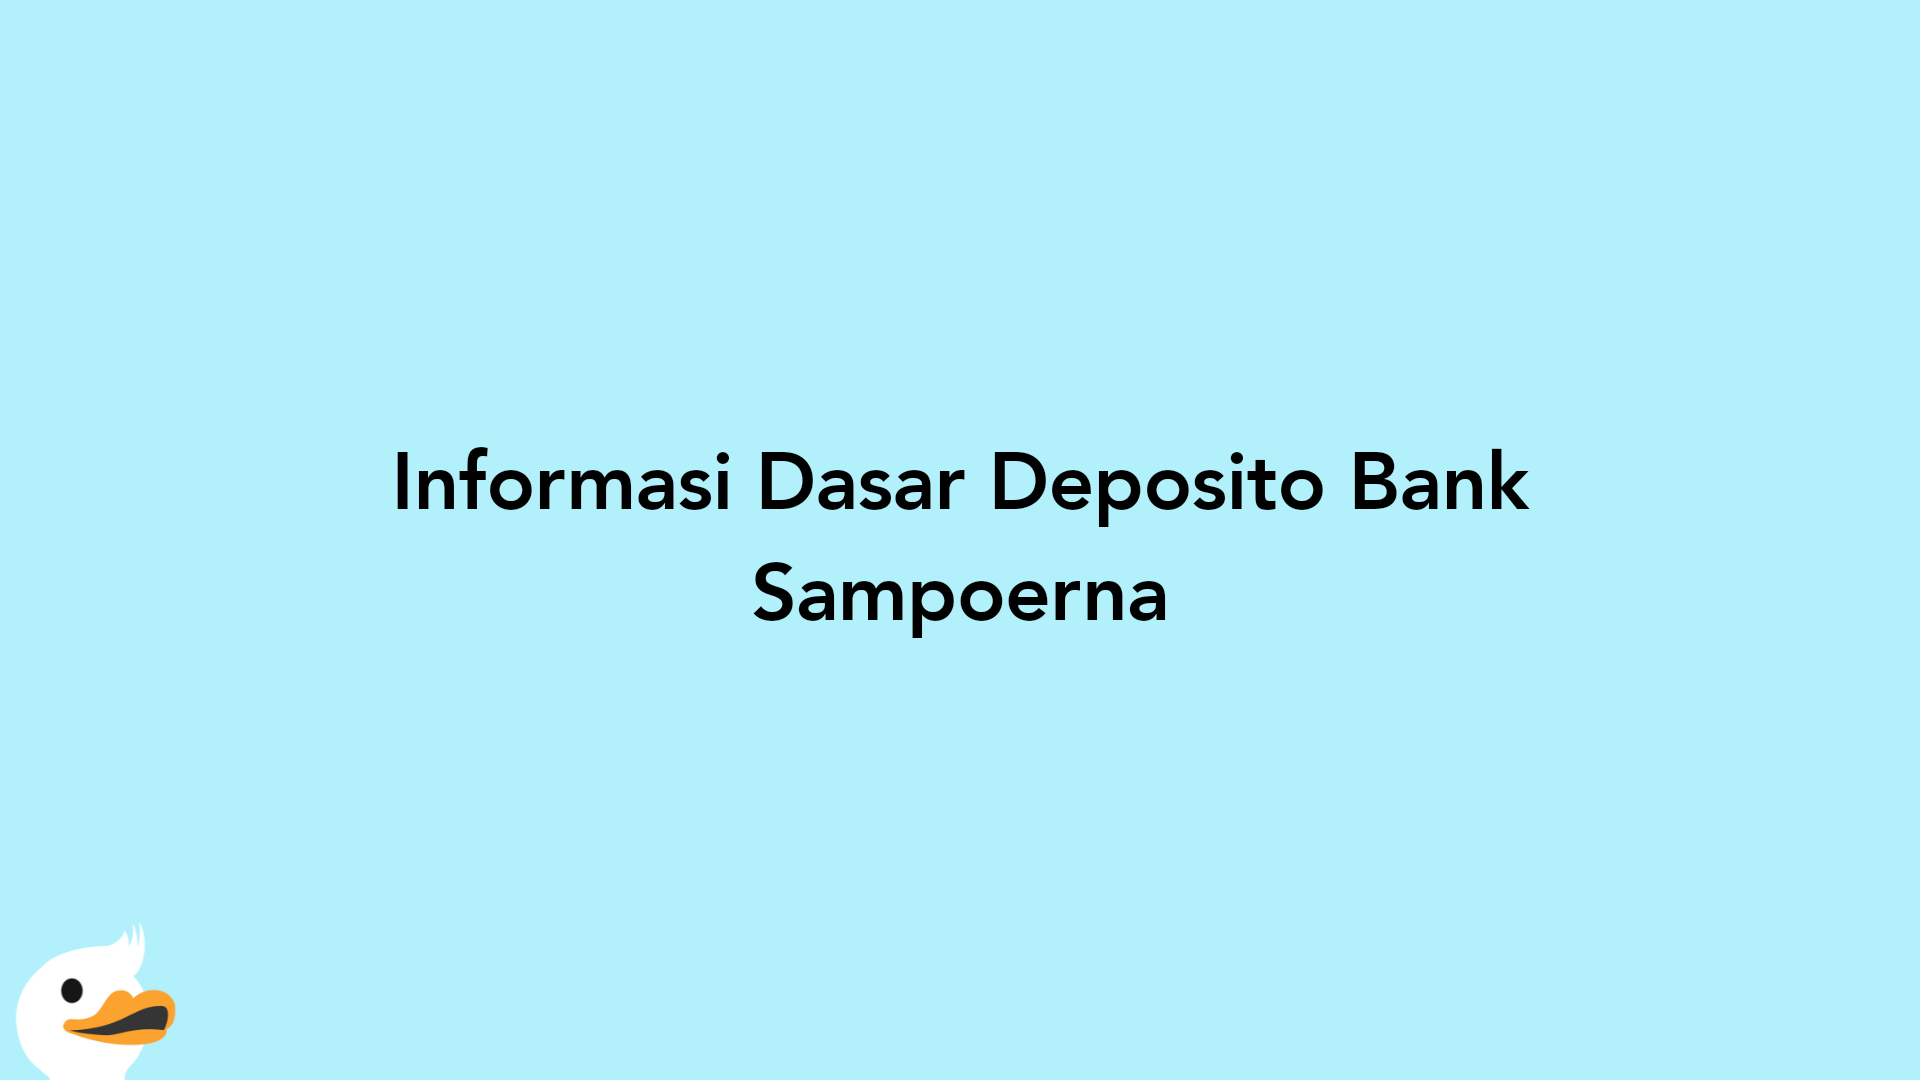 Informasi Dasar Deposito Bank Sampoerna